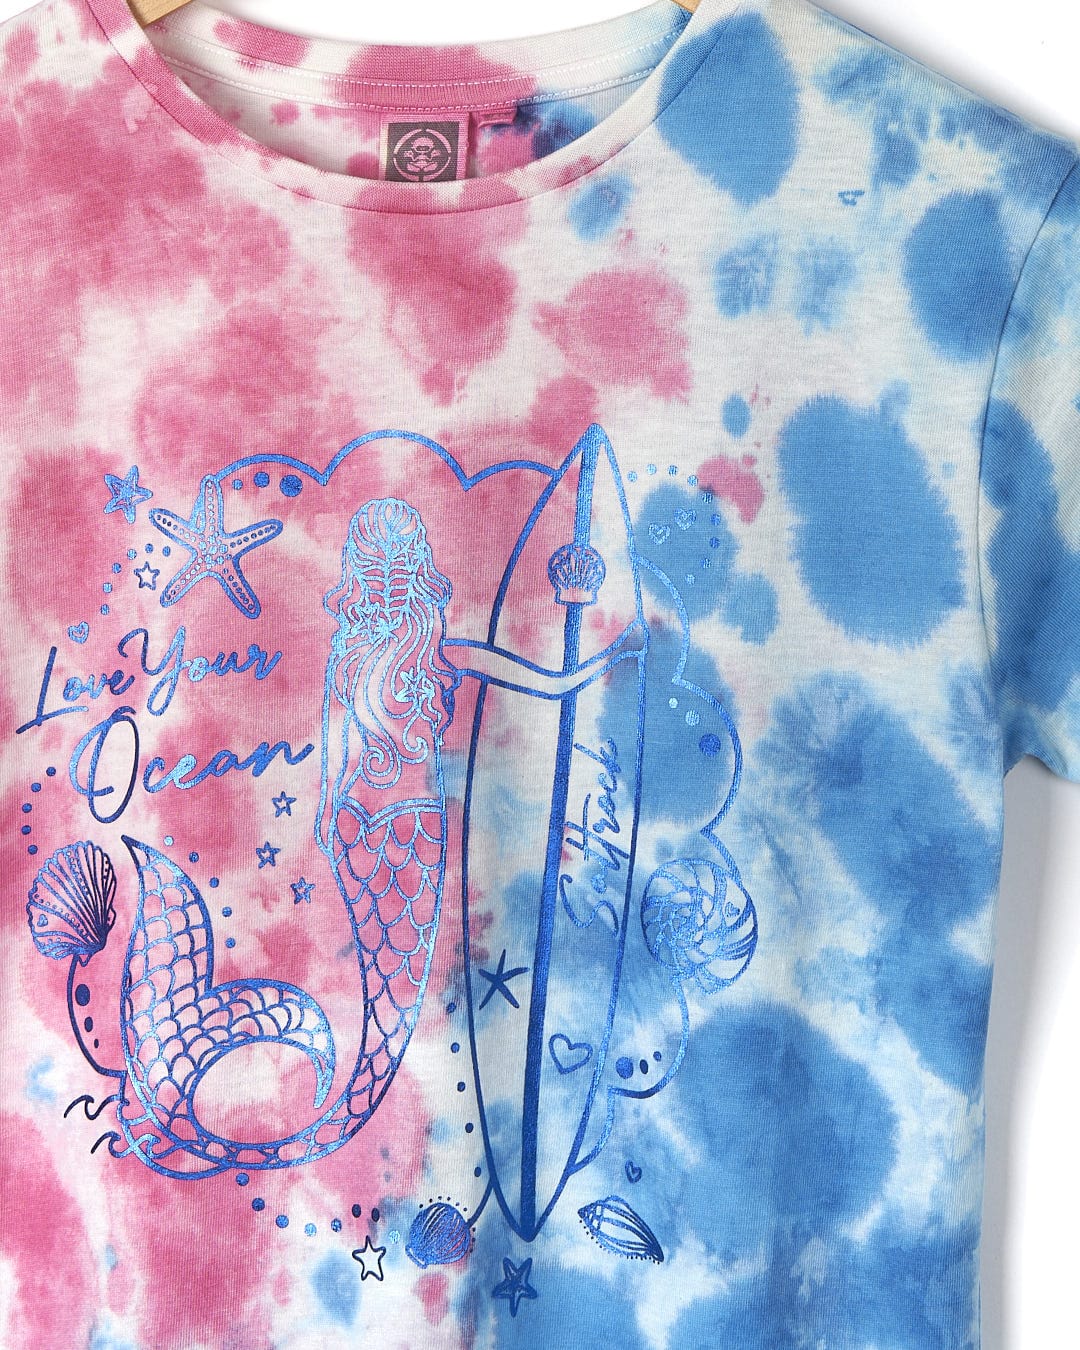 Get beach ready with this Saltrock Mermaid Surf - Kids Tie Dye Short Sleeve T-Shirt - Blue/Pink.